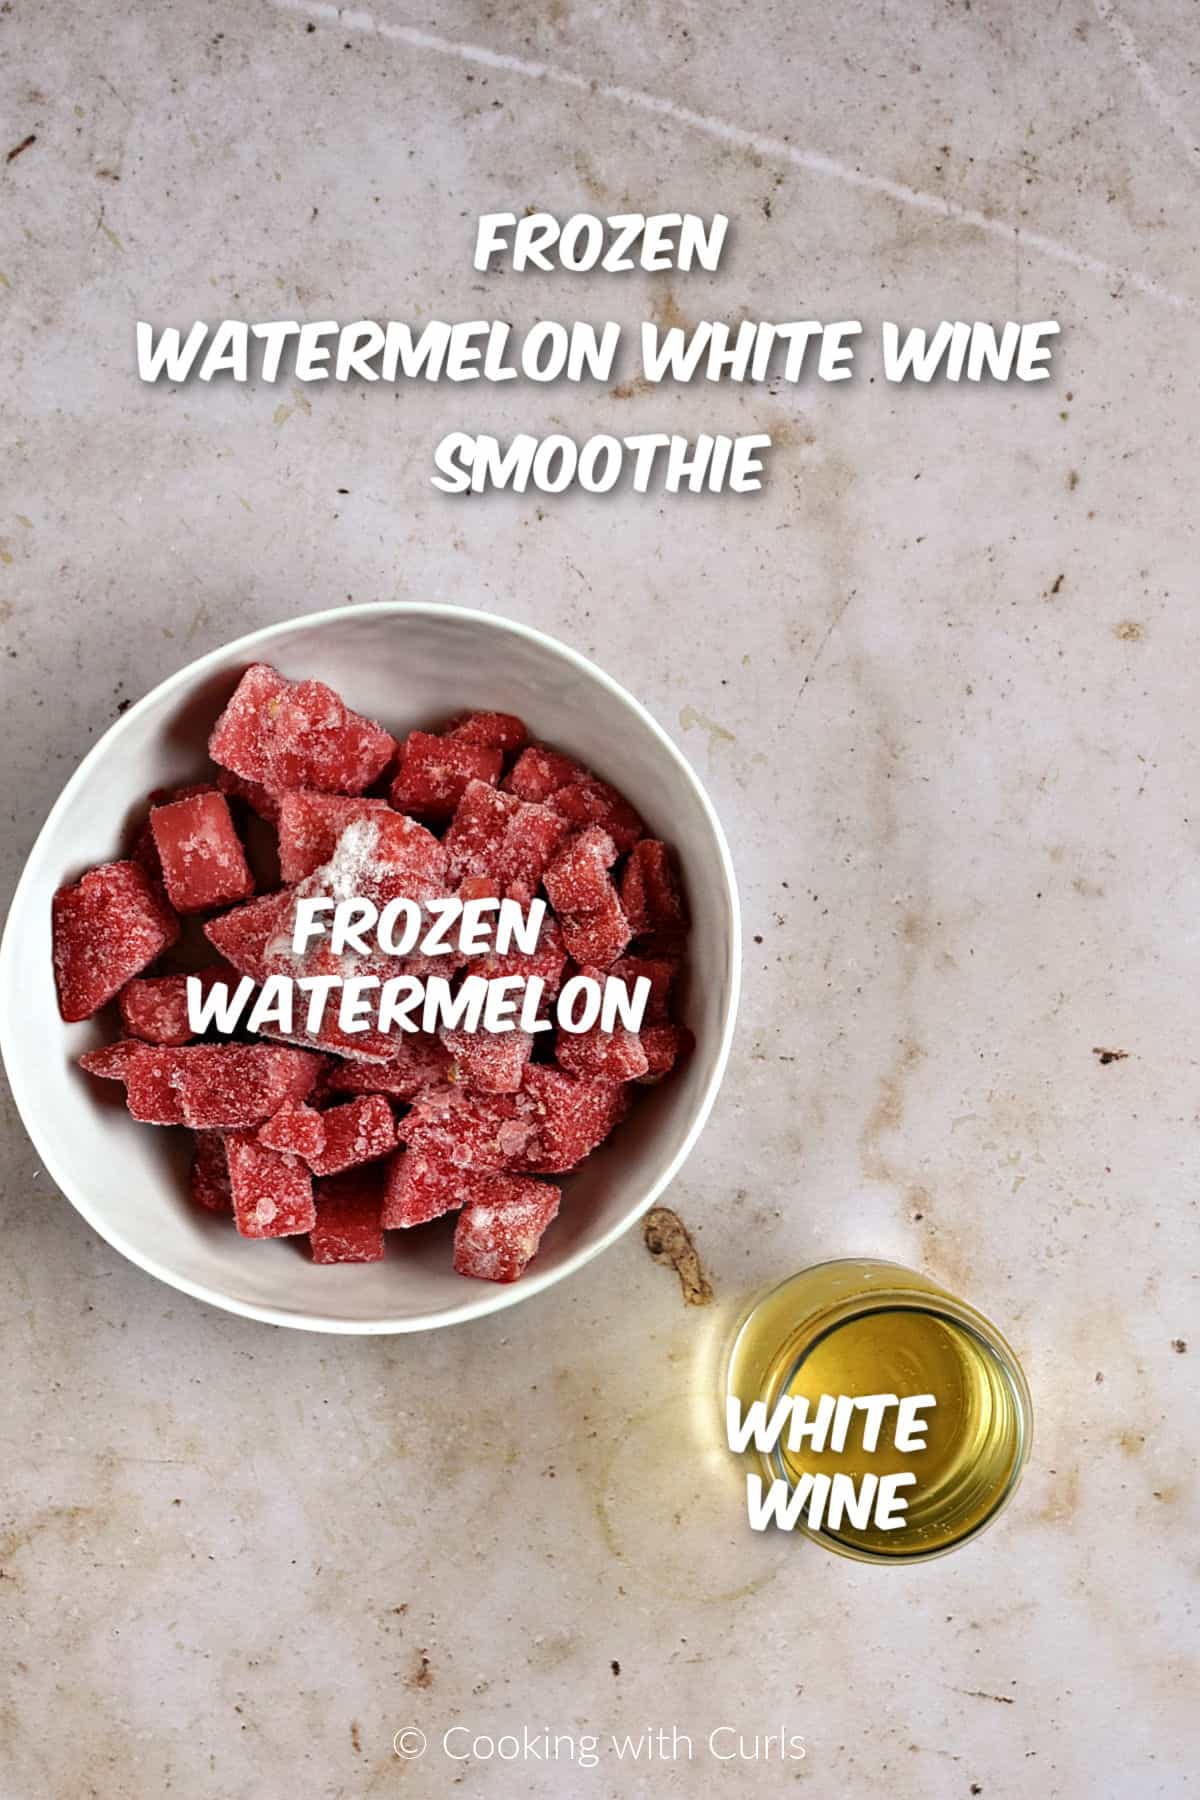 Frozen watermelon chunks and white wine to make watermelon white wine smoothie. 